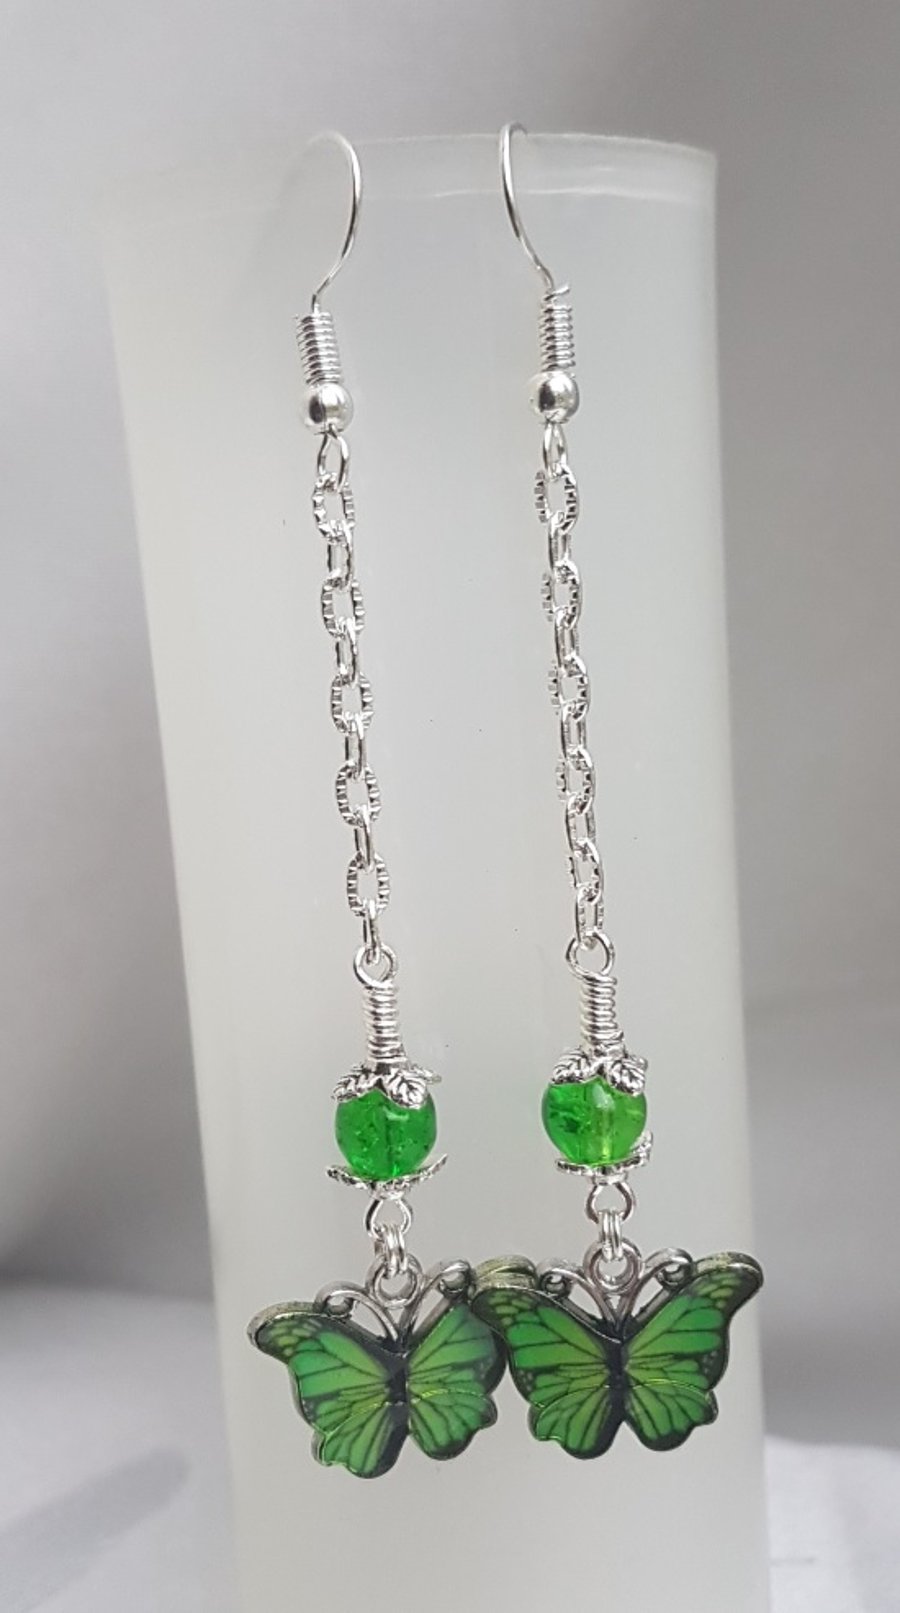 Gorgeous Dangly Green Butterfly Earrings - Silver Tones.